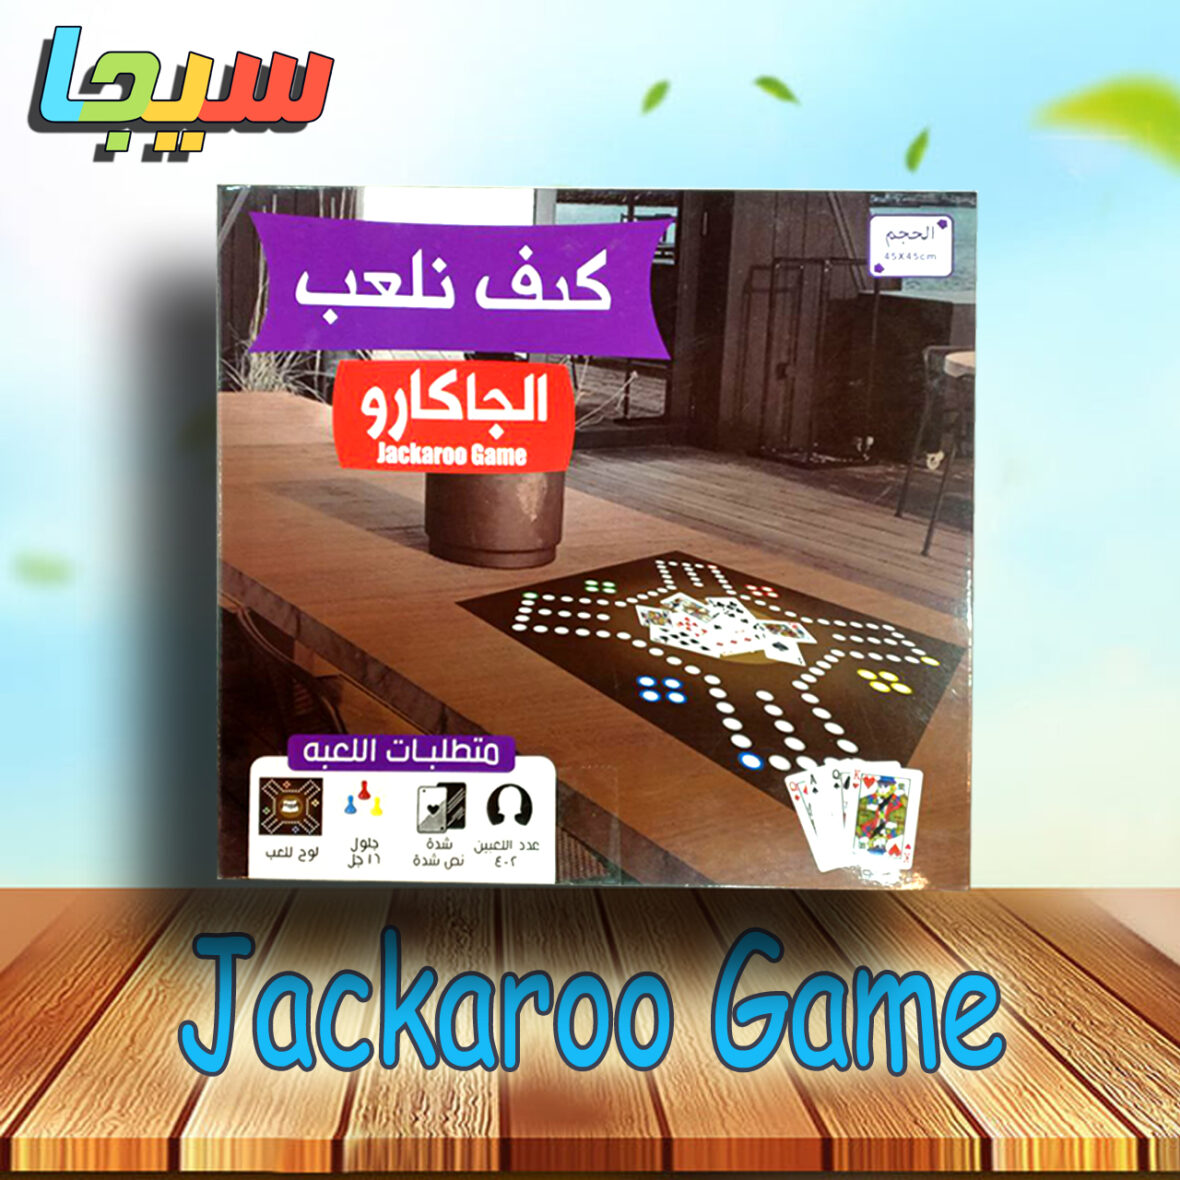 Jackaroo Game